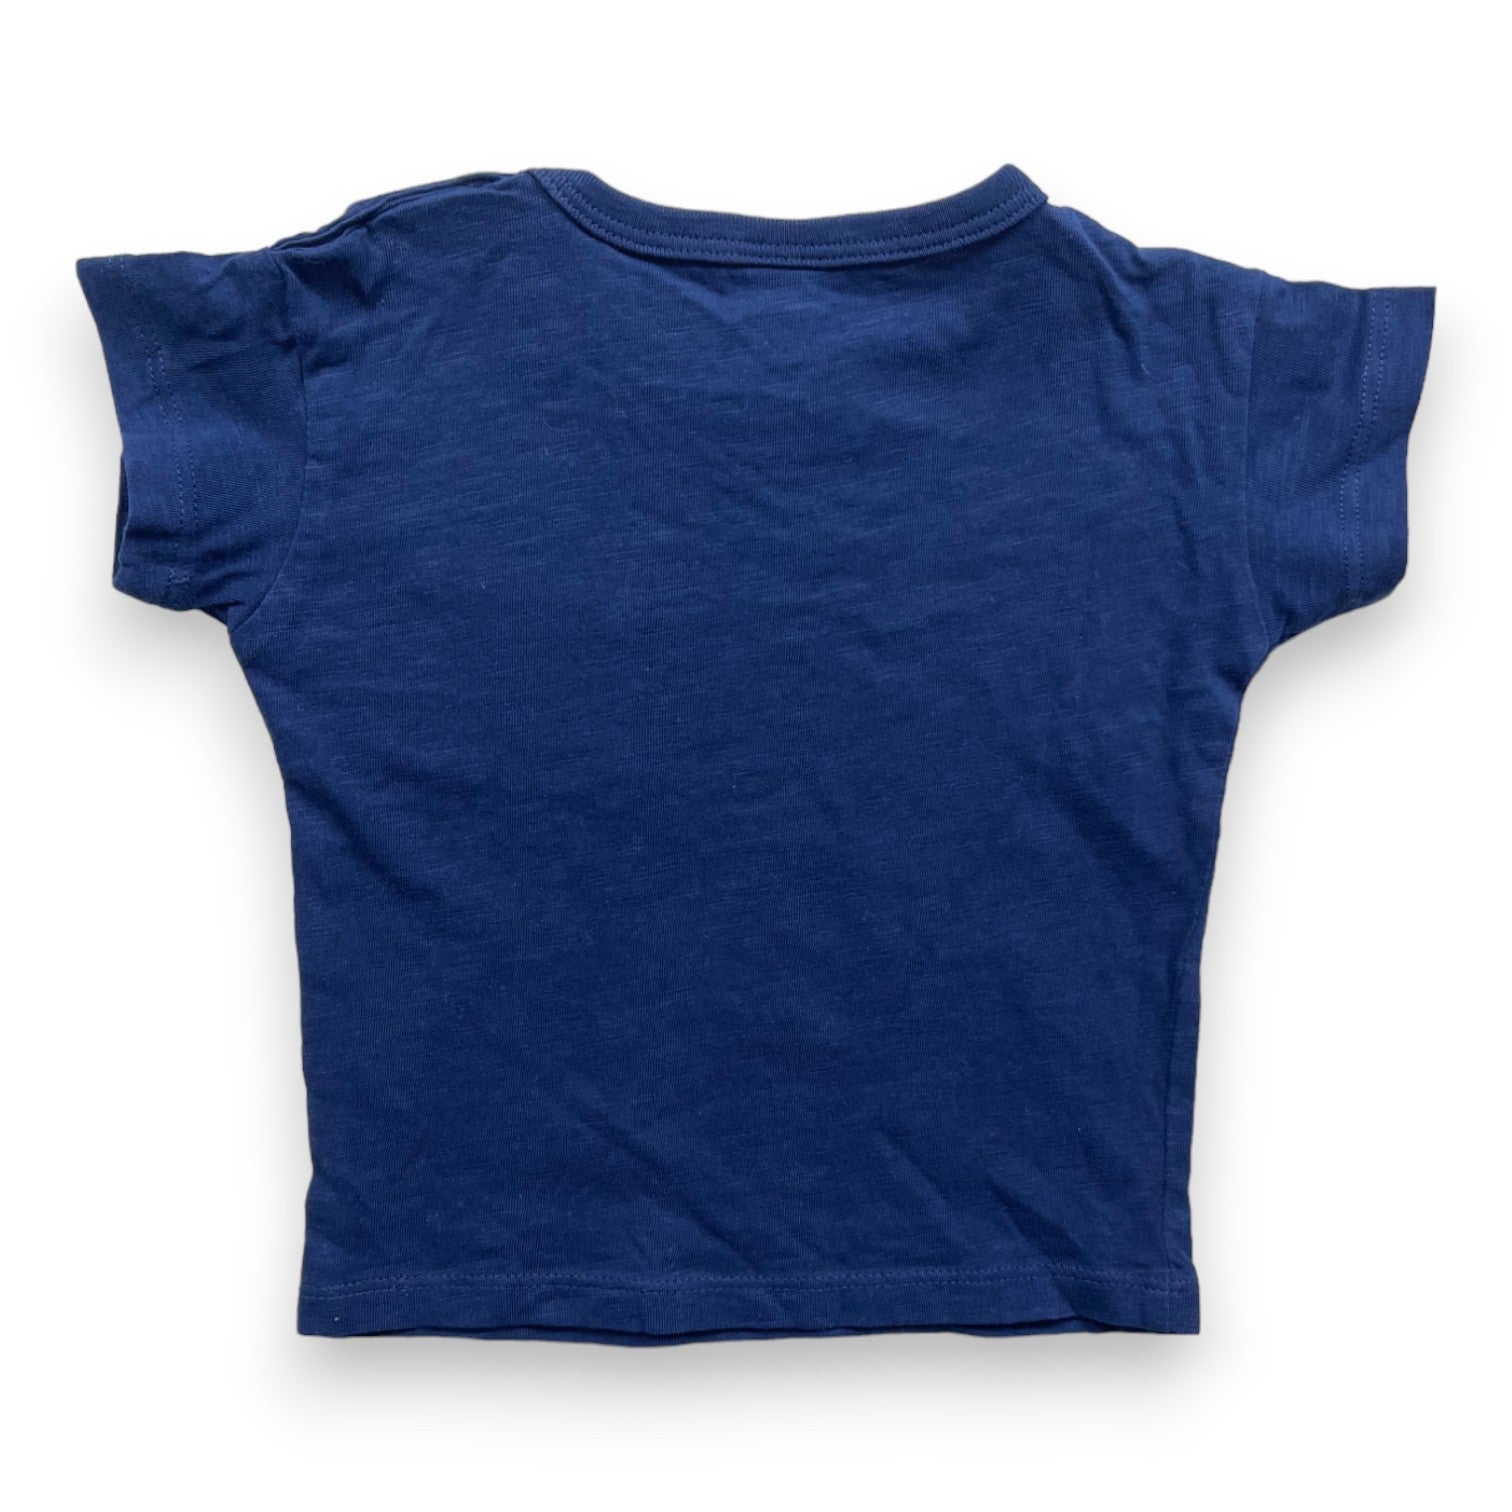 PETIT BATEAU - T shirt bleu marine - 6 mois